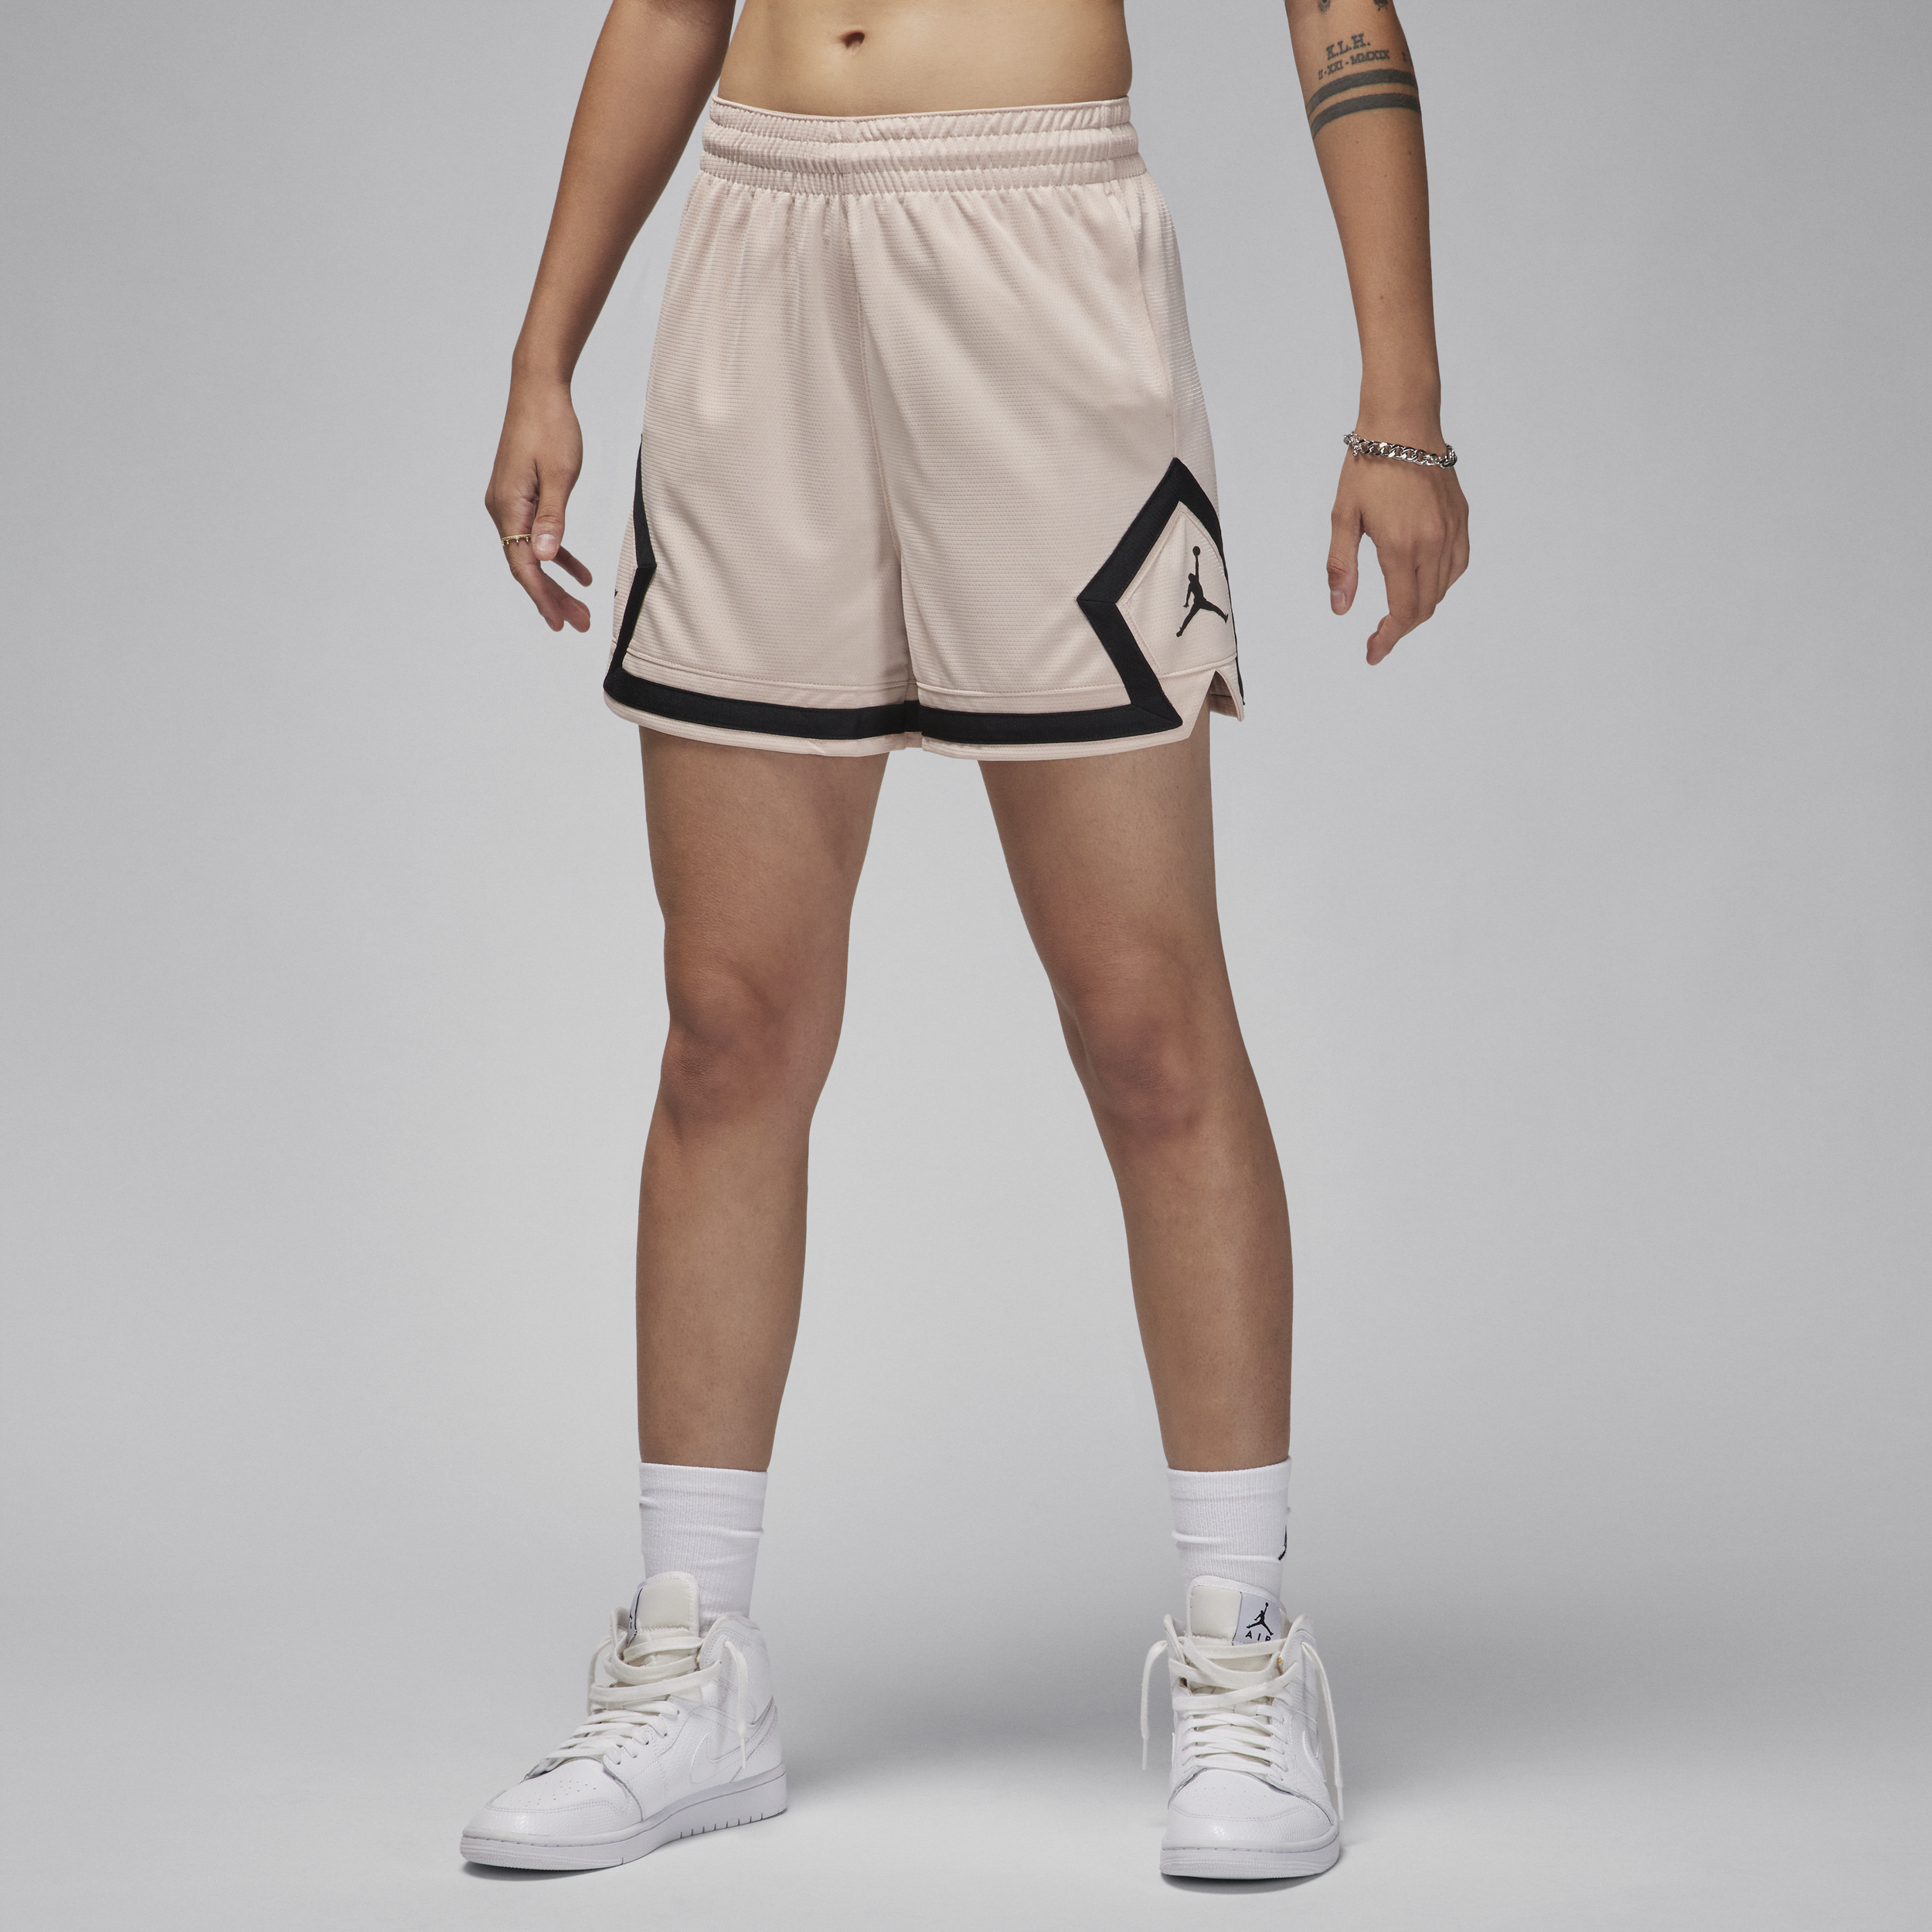 Jordan Sport Diamond-shorts (10 cm) til kvinder - brun